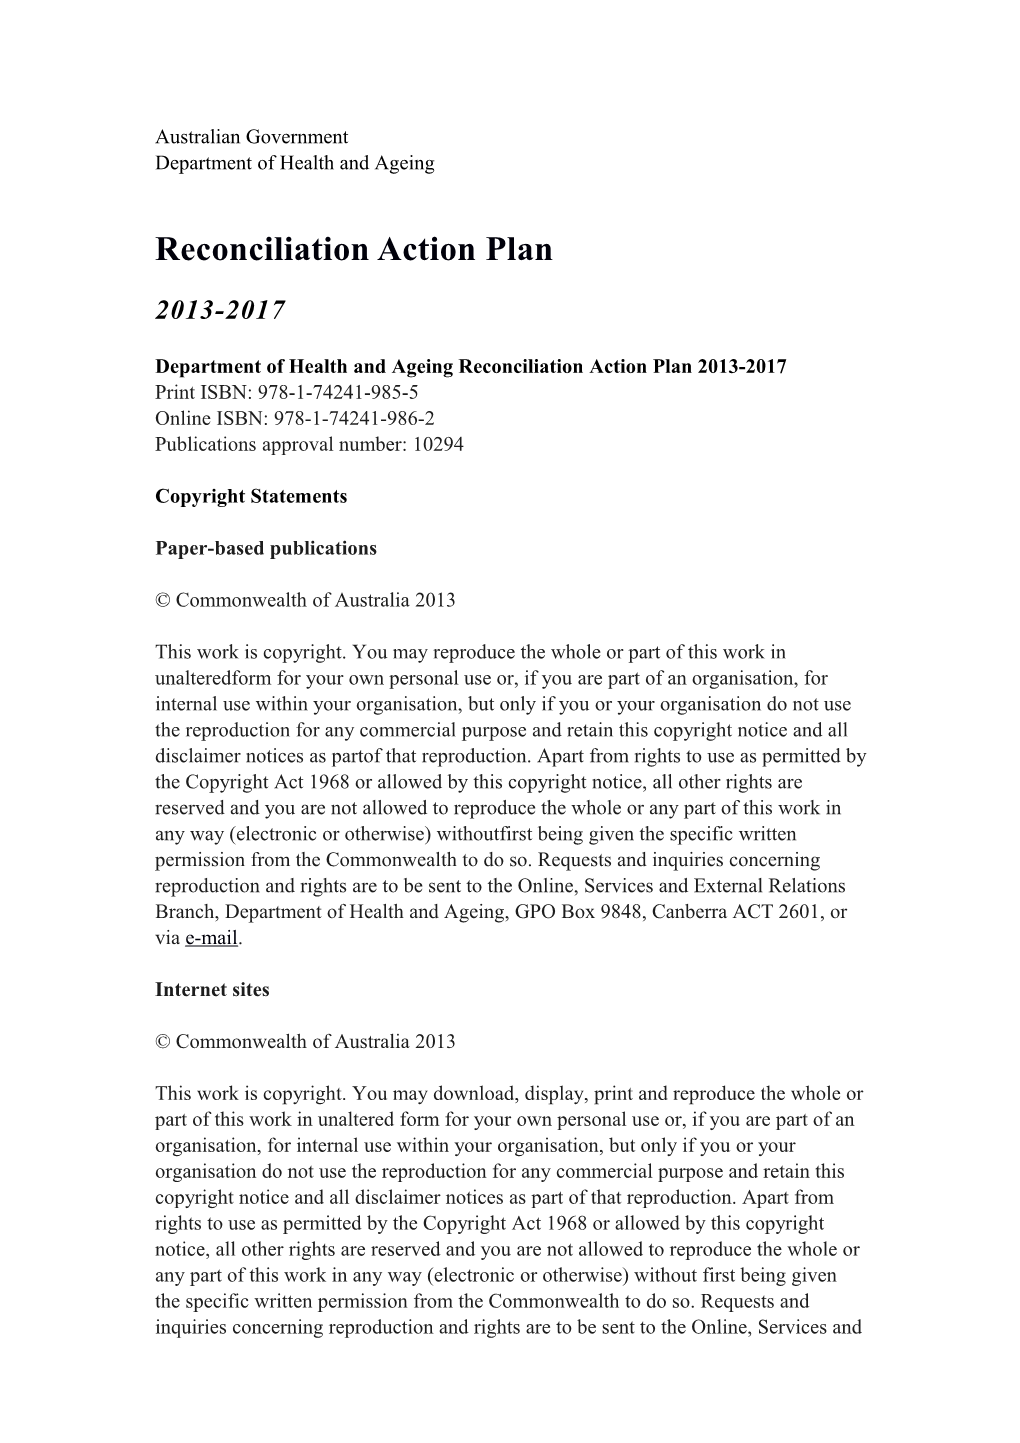 Reconciliation Action Plan